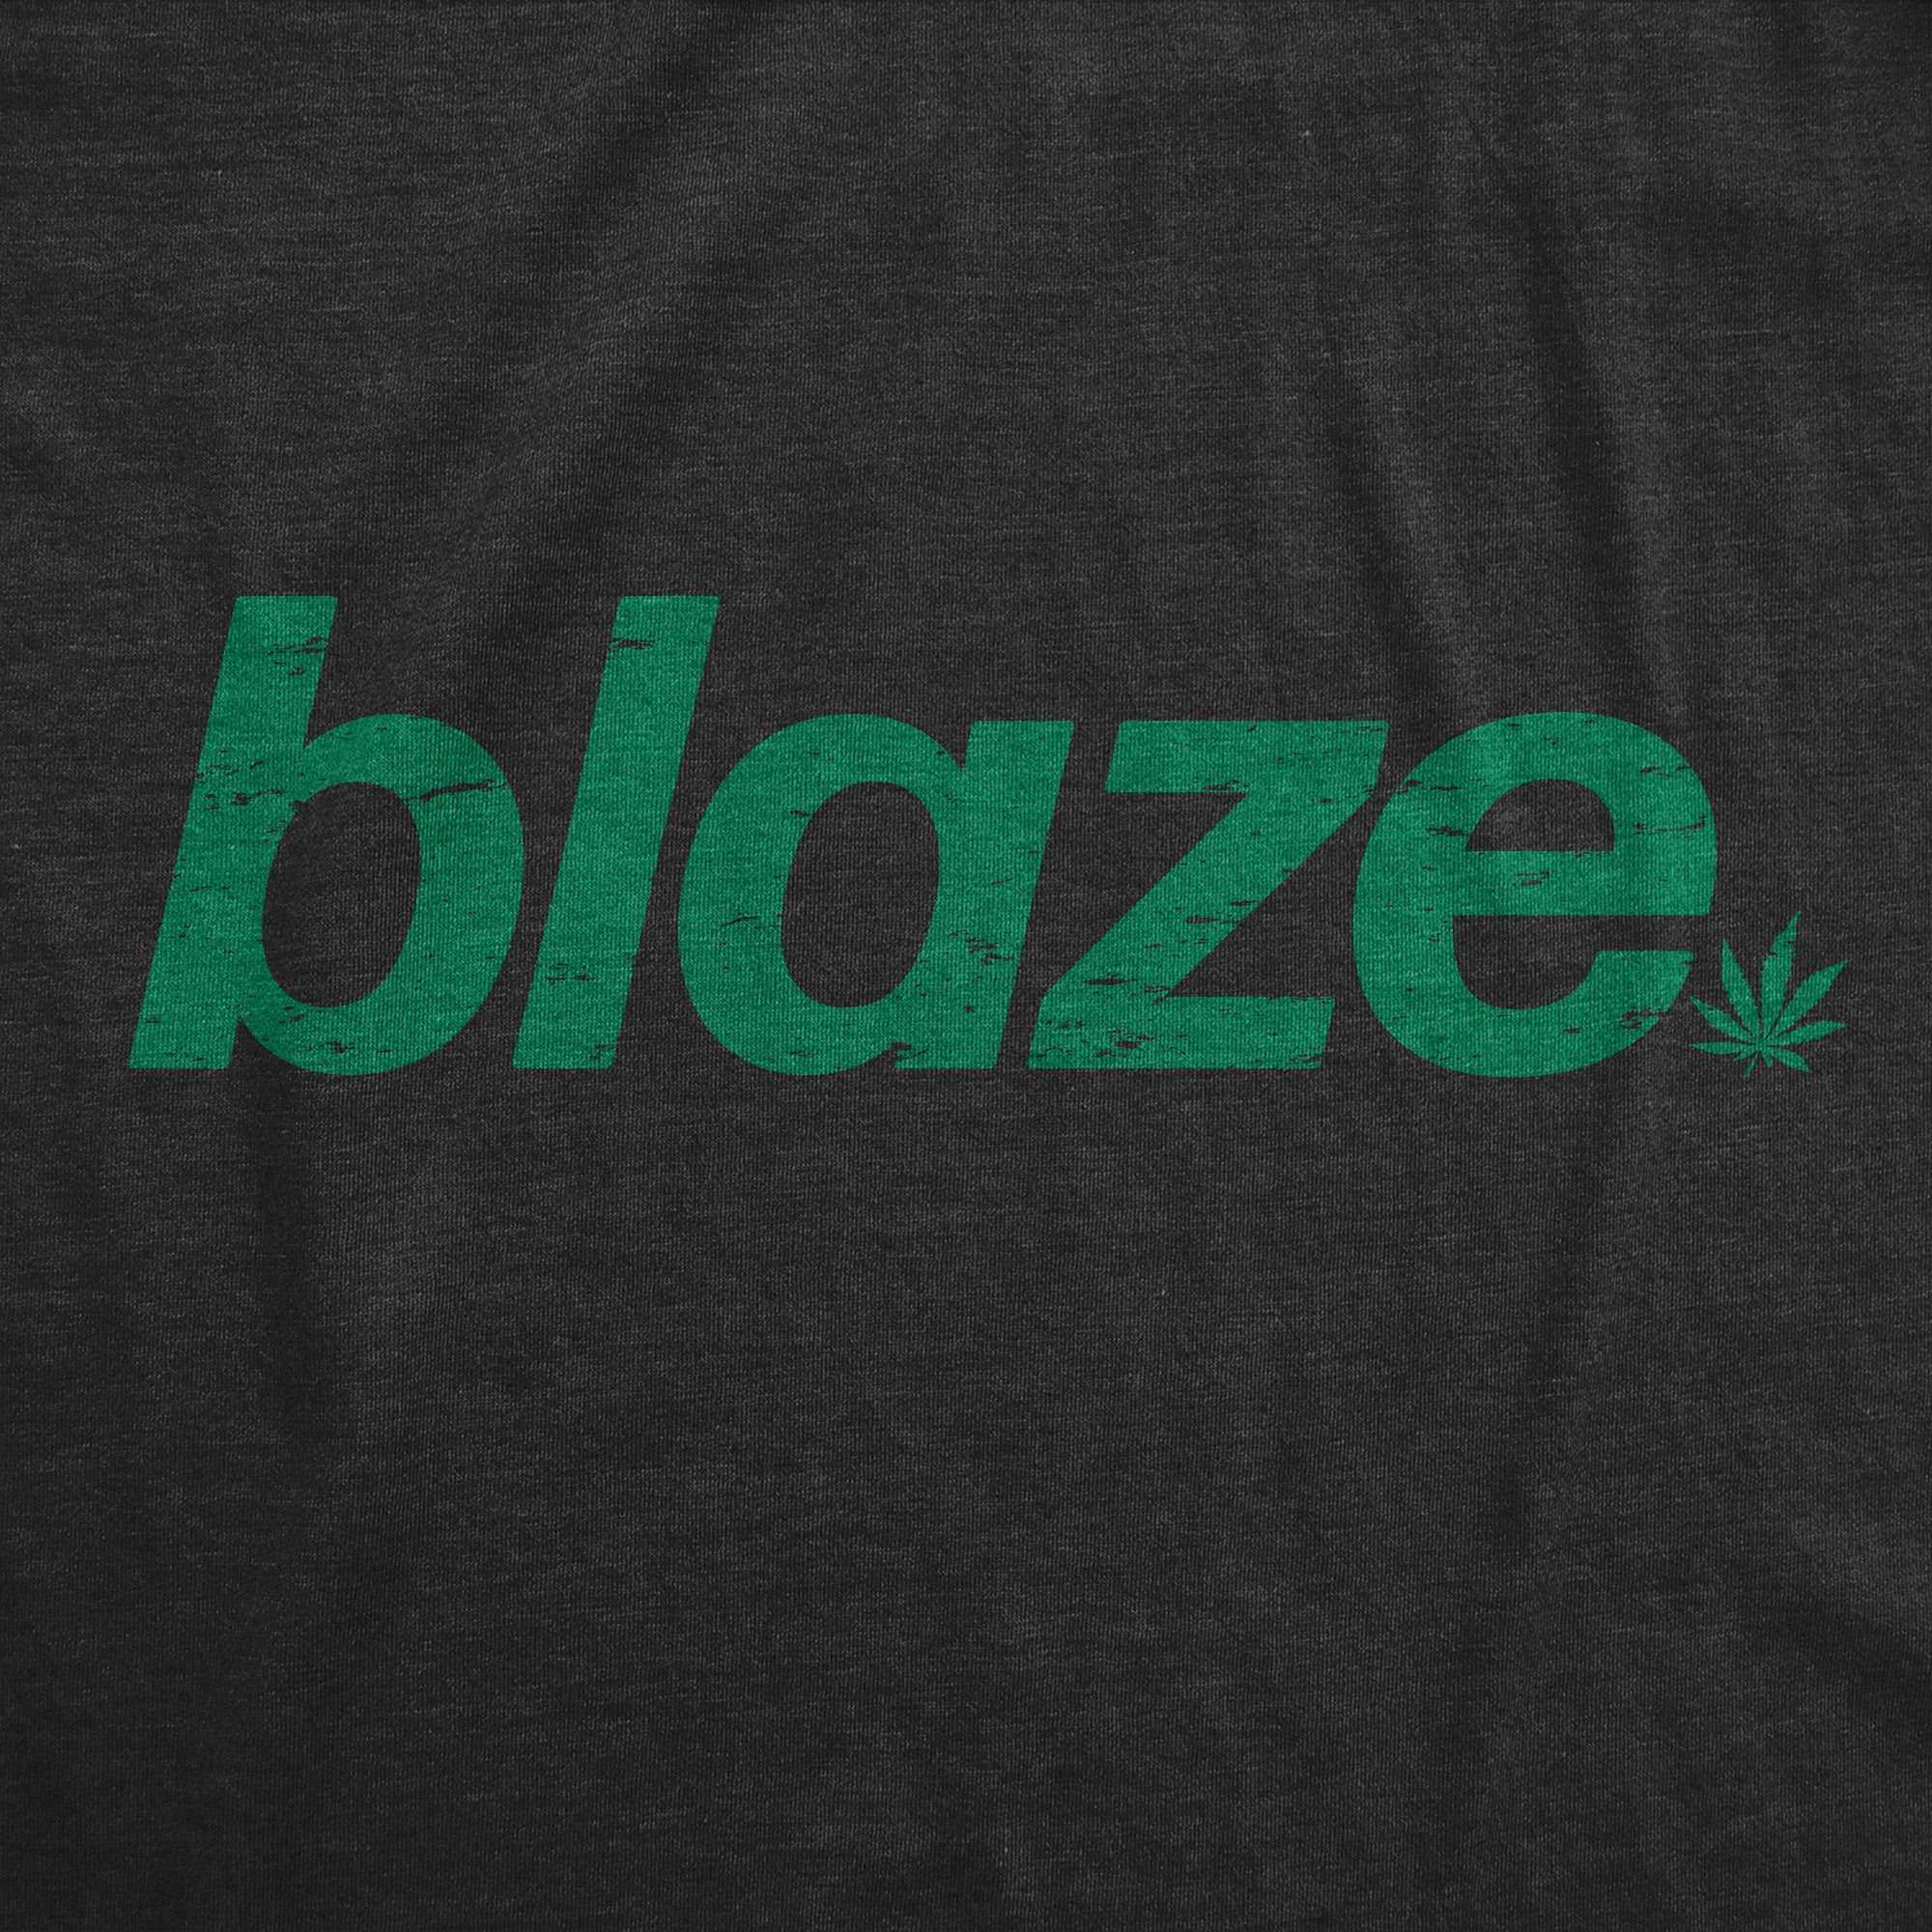 Funny Heather Black - BLAZE Blaze Mens T Shirt Nerdy 420 Tee